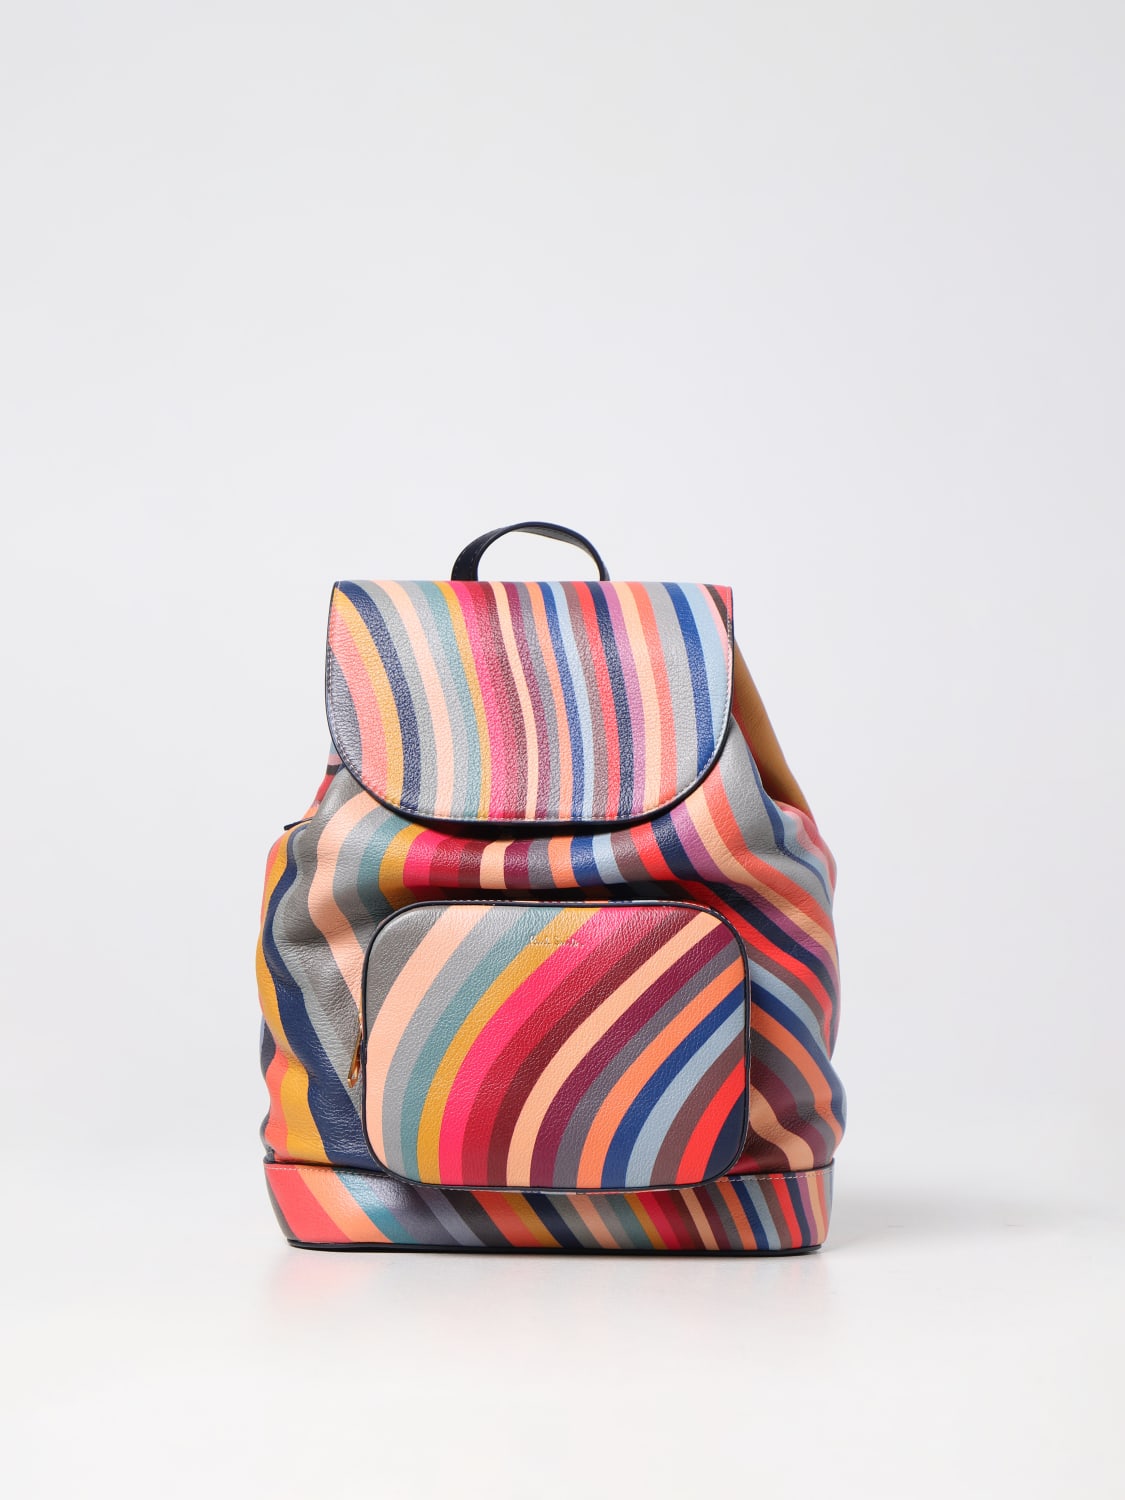 Handbags Paul Smith, Style code: w1a-6595-eswirl in 2023